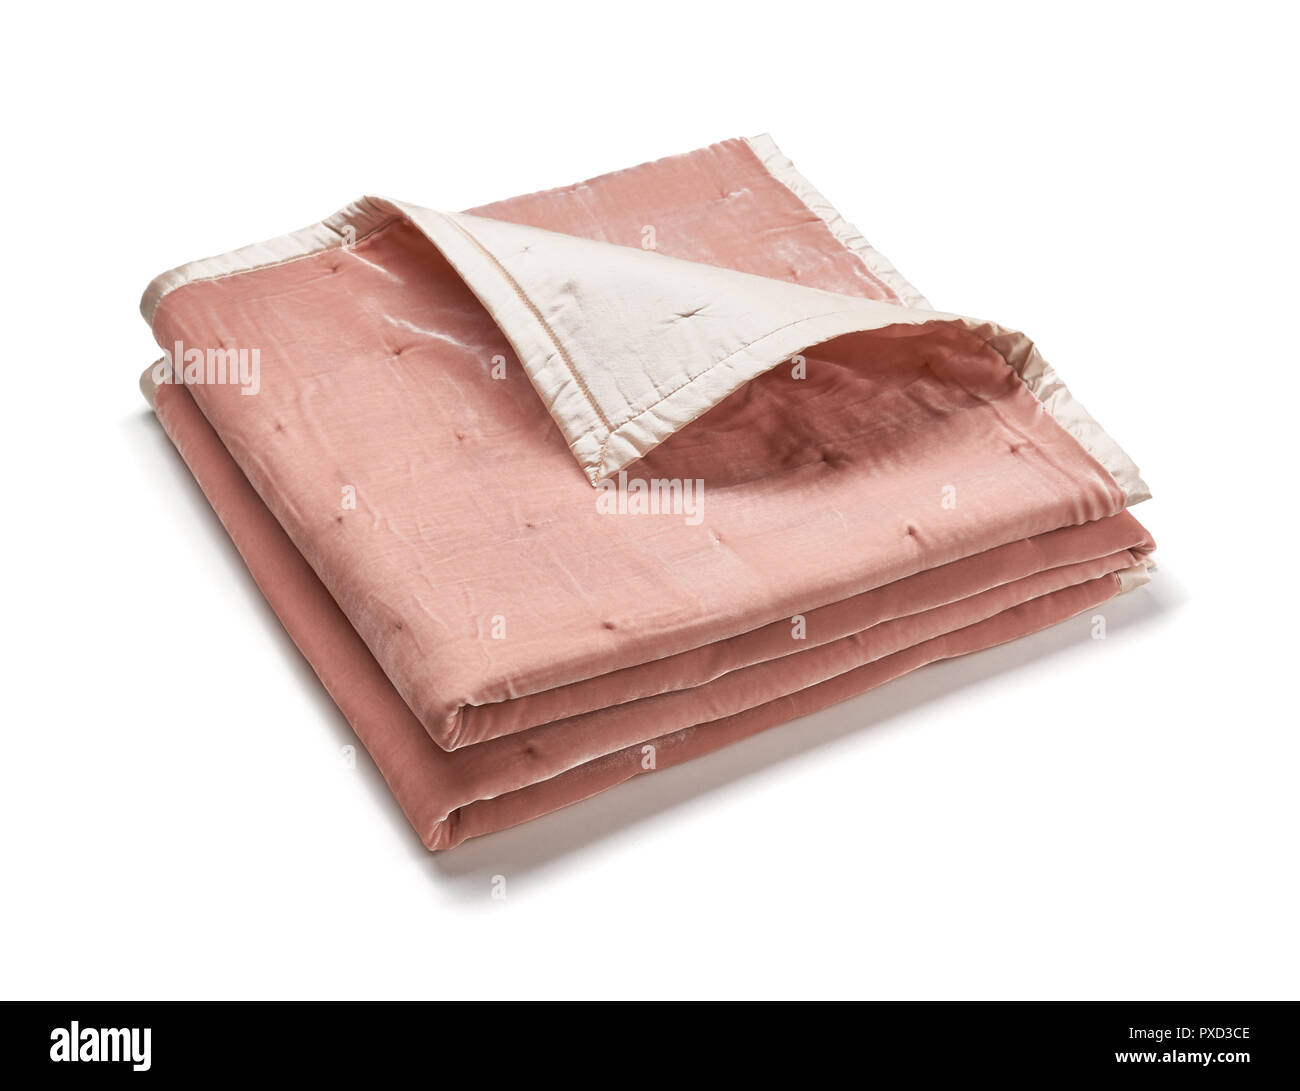 Pink blanket made of velor fabric, neatly folded, isolated on white background Stock Photo